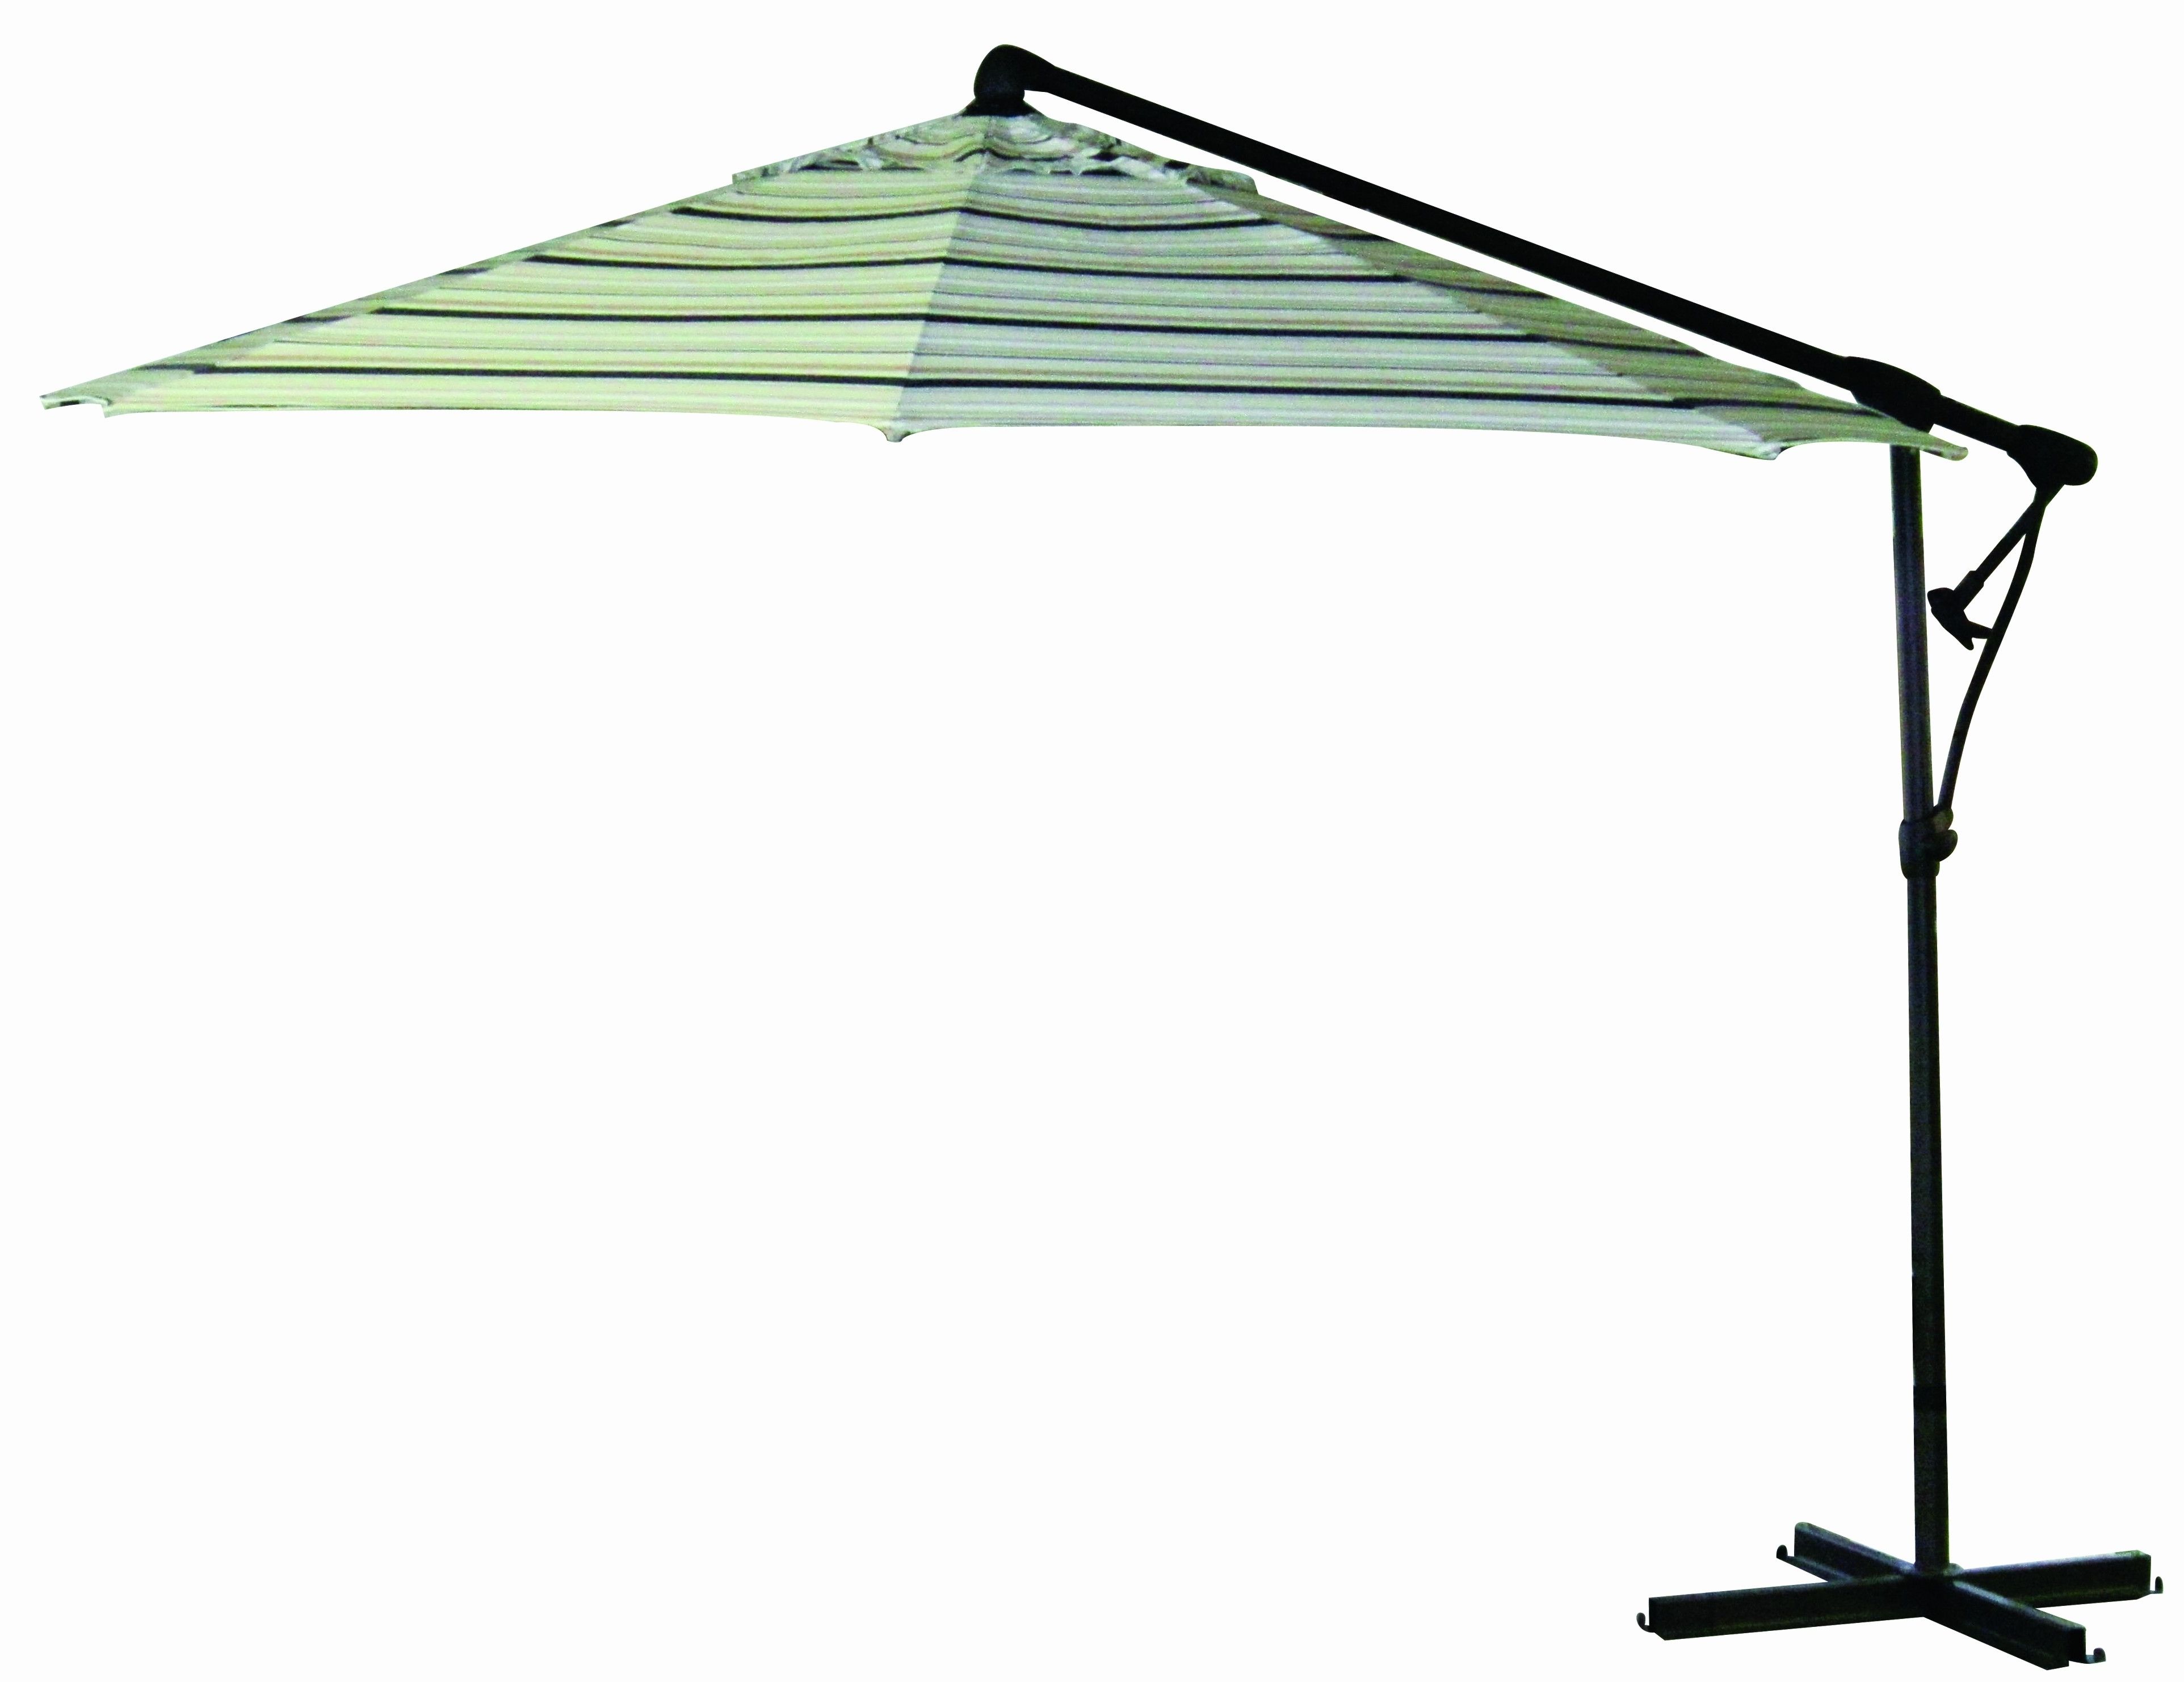 Heavy Duty Patio Umbrella With Cream And Wicker Furniturel Home Within Trendy Striped Patio Umbrellas (View 16 of 20)